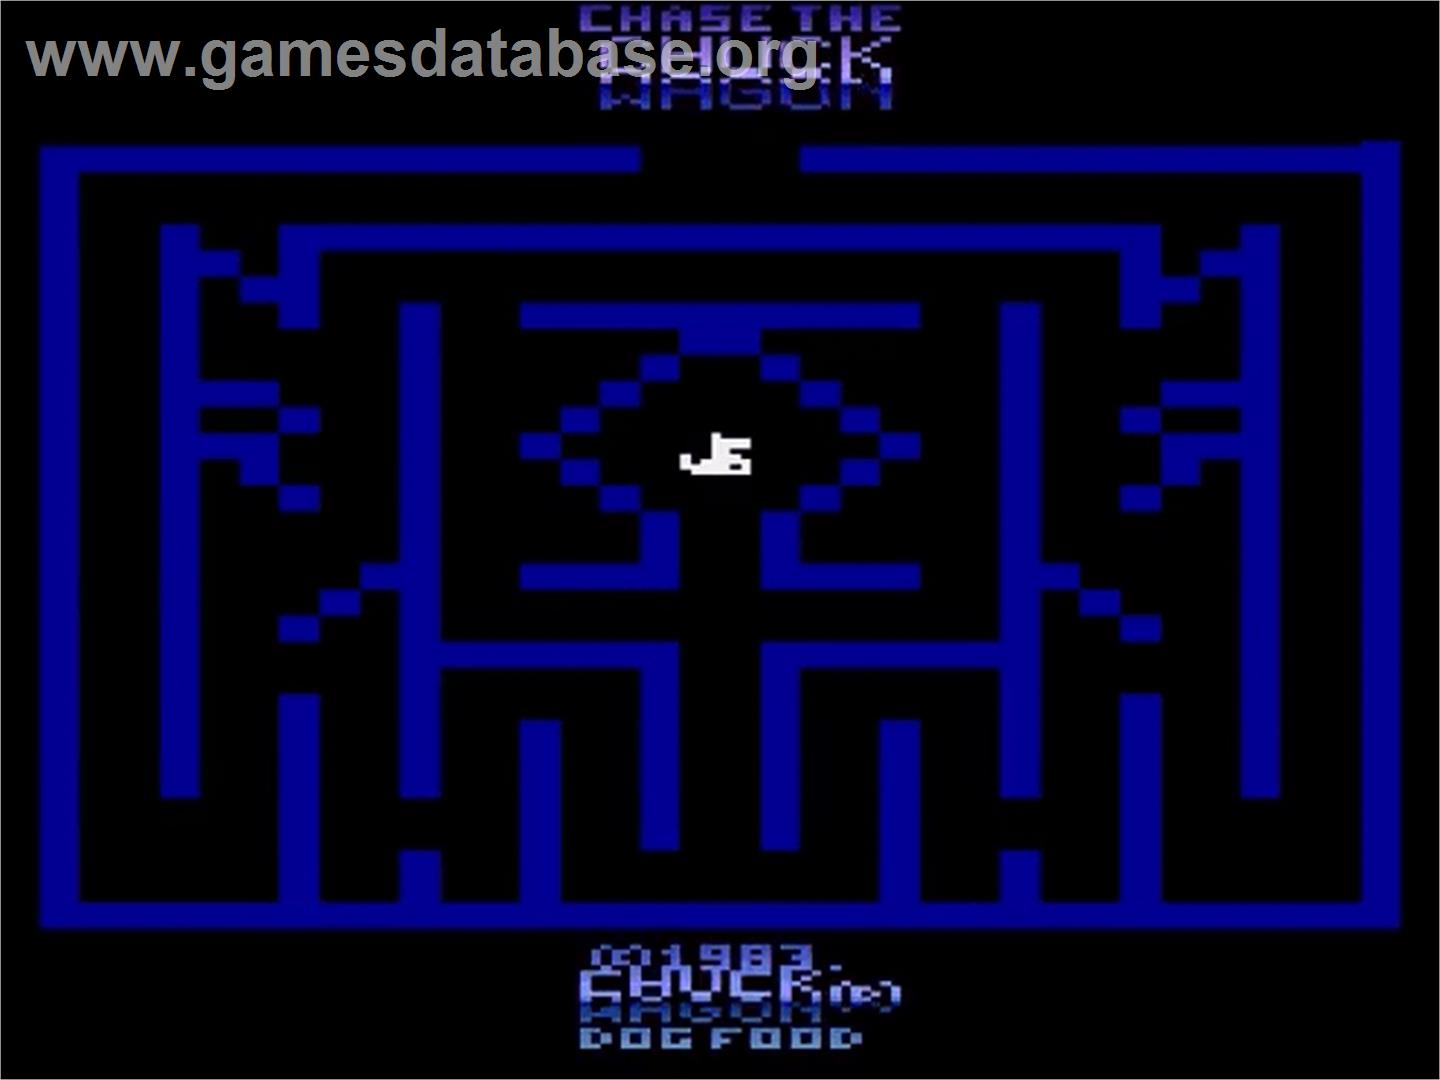 Chase the Chuck Wagon - Atari 2600 - Artwork - Title Screen